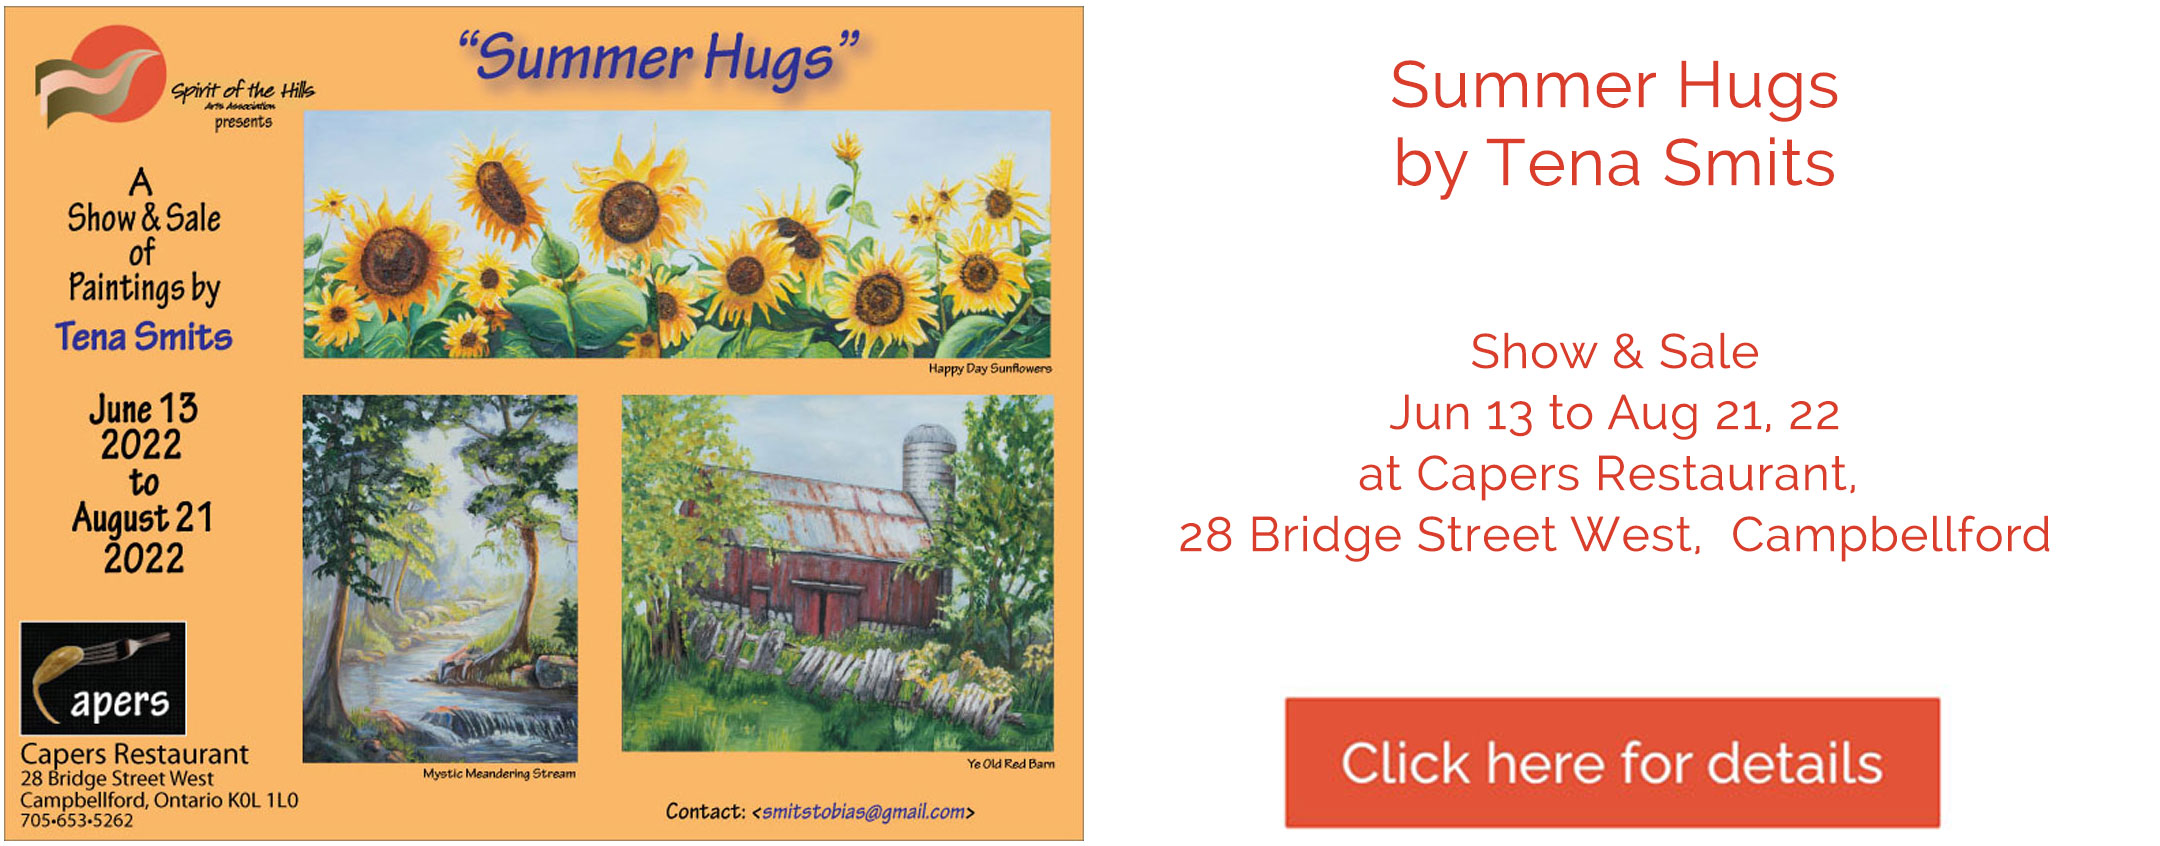 Summer Hugs by Tena Smits